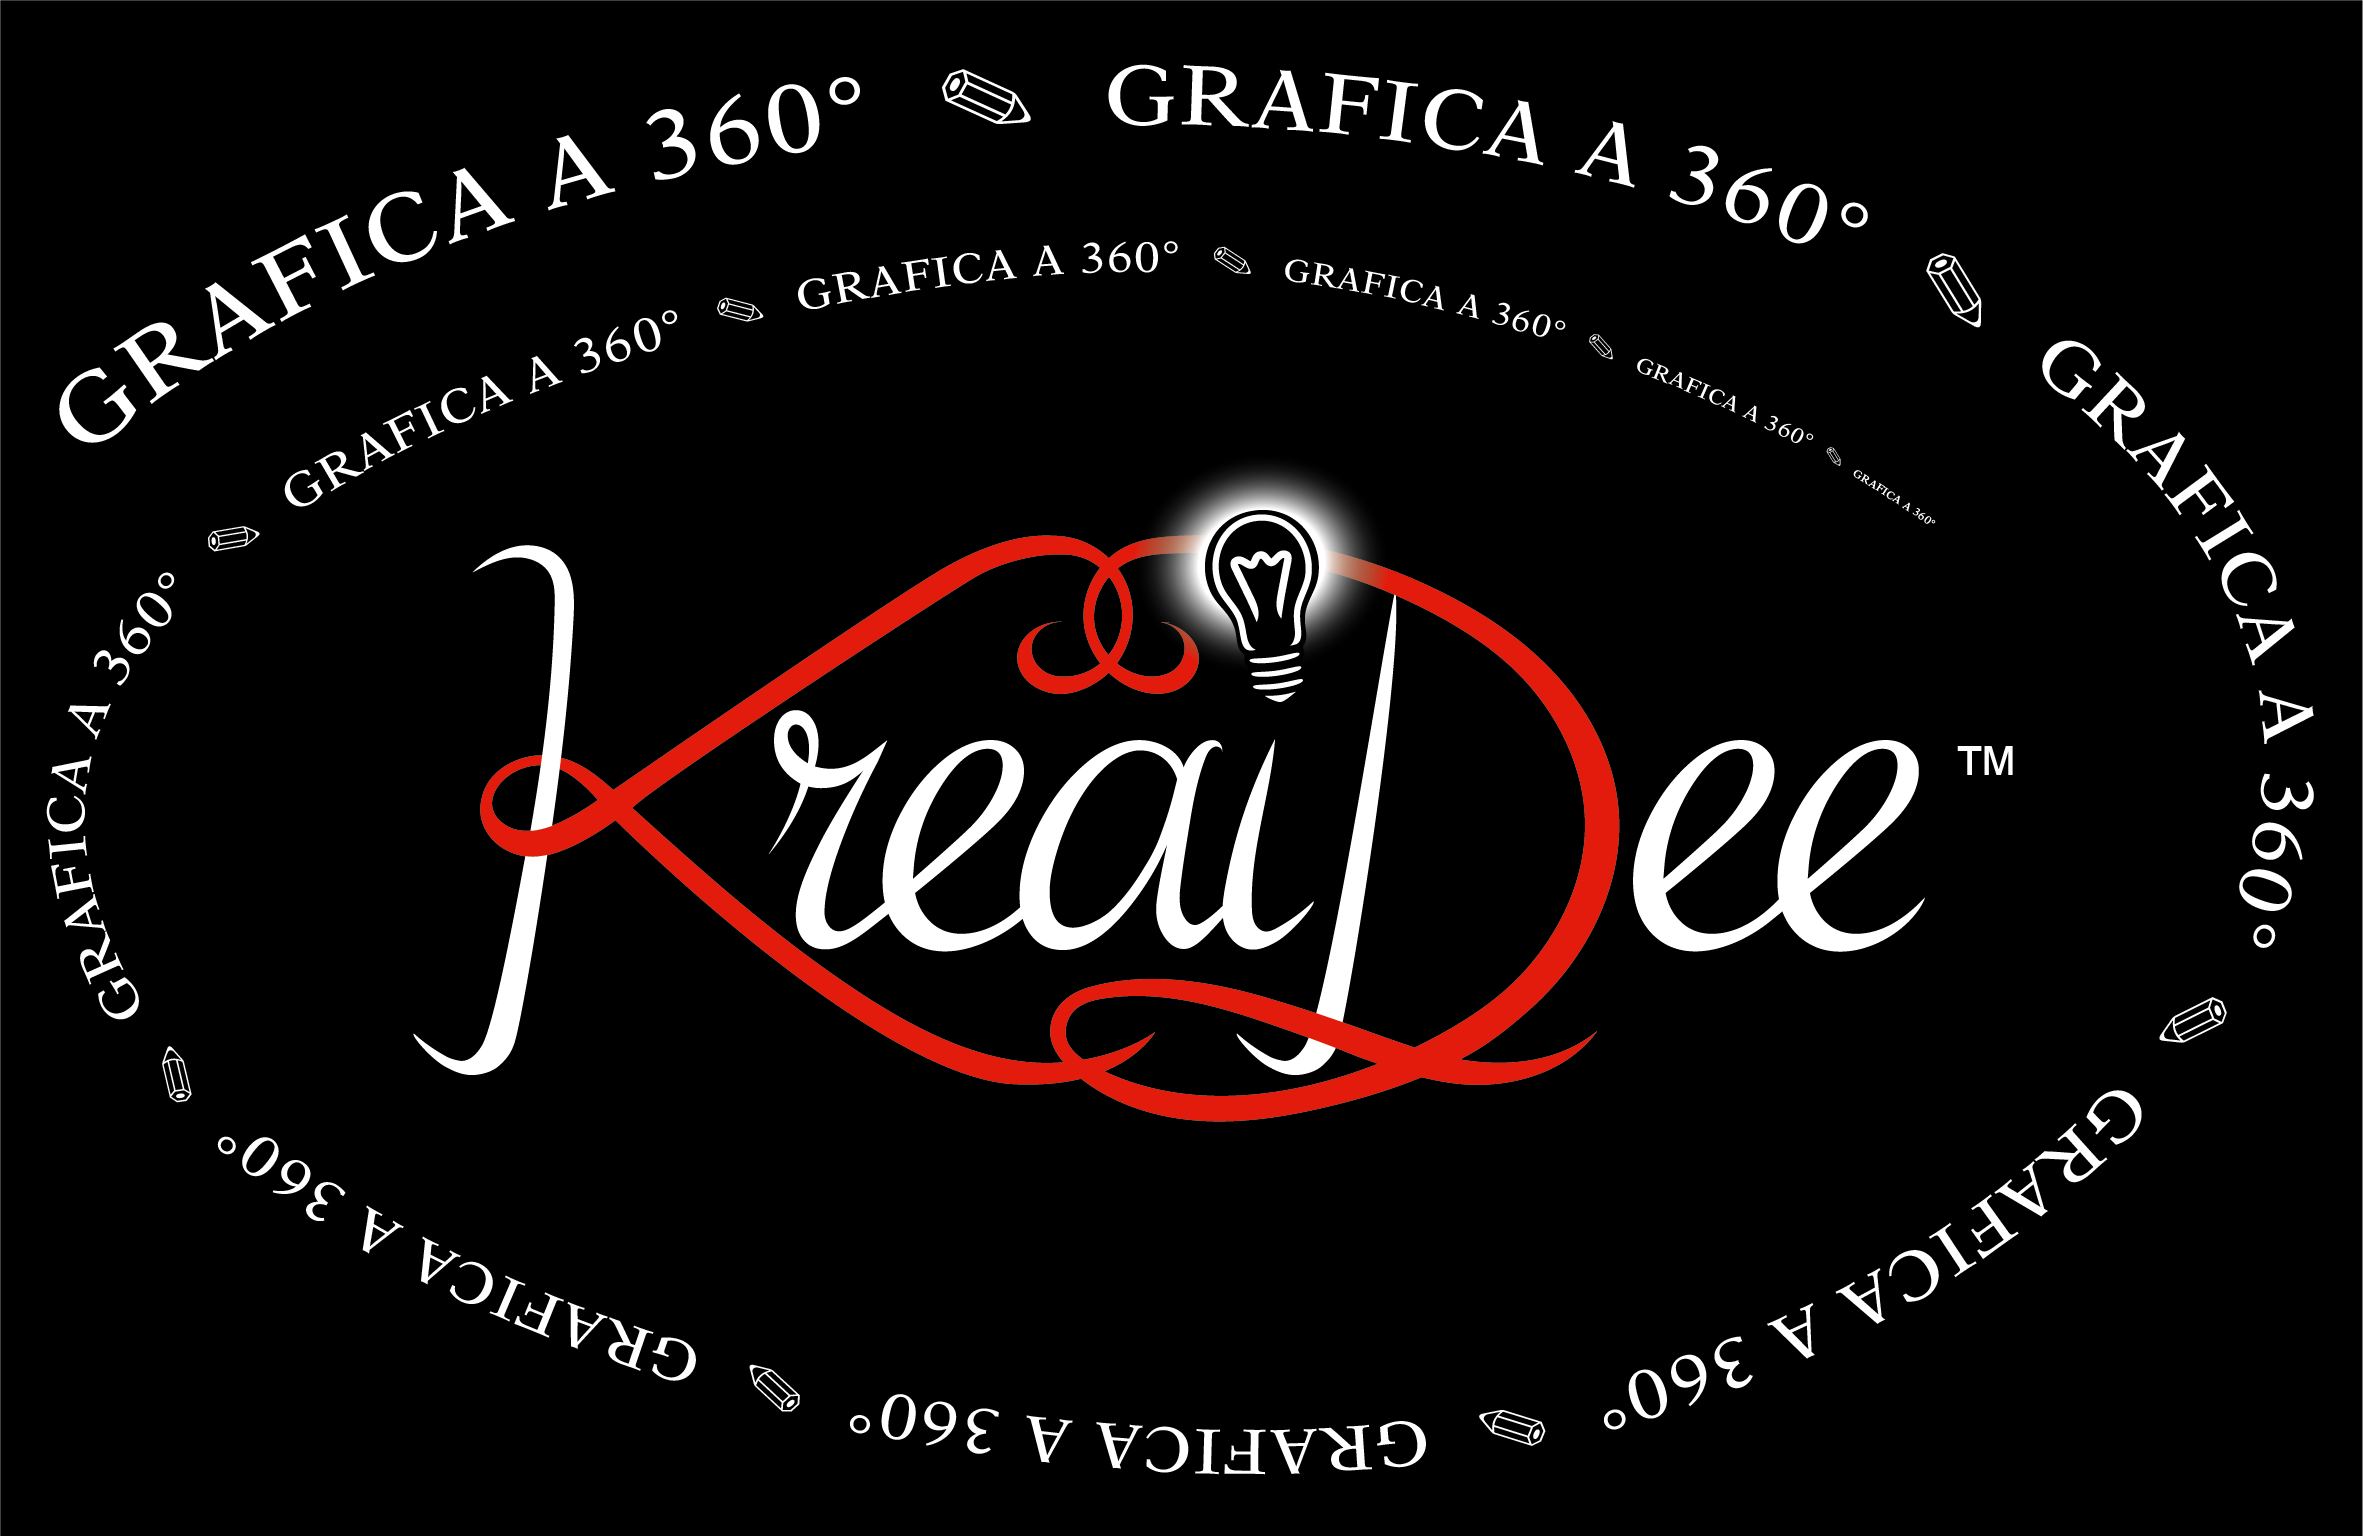 KreaiDee - grafica a 360°